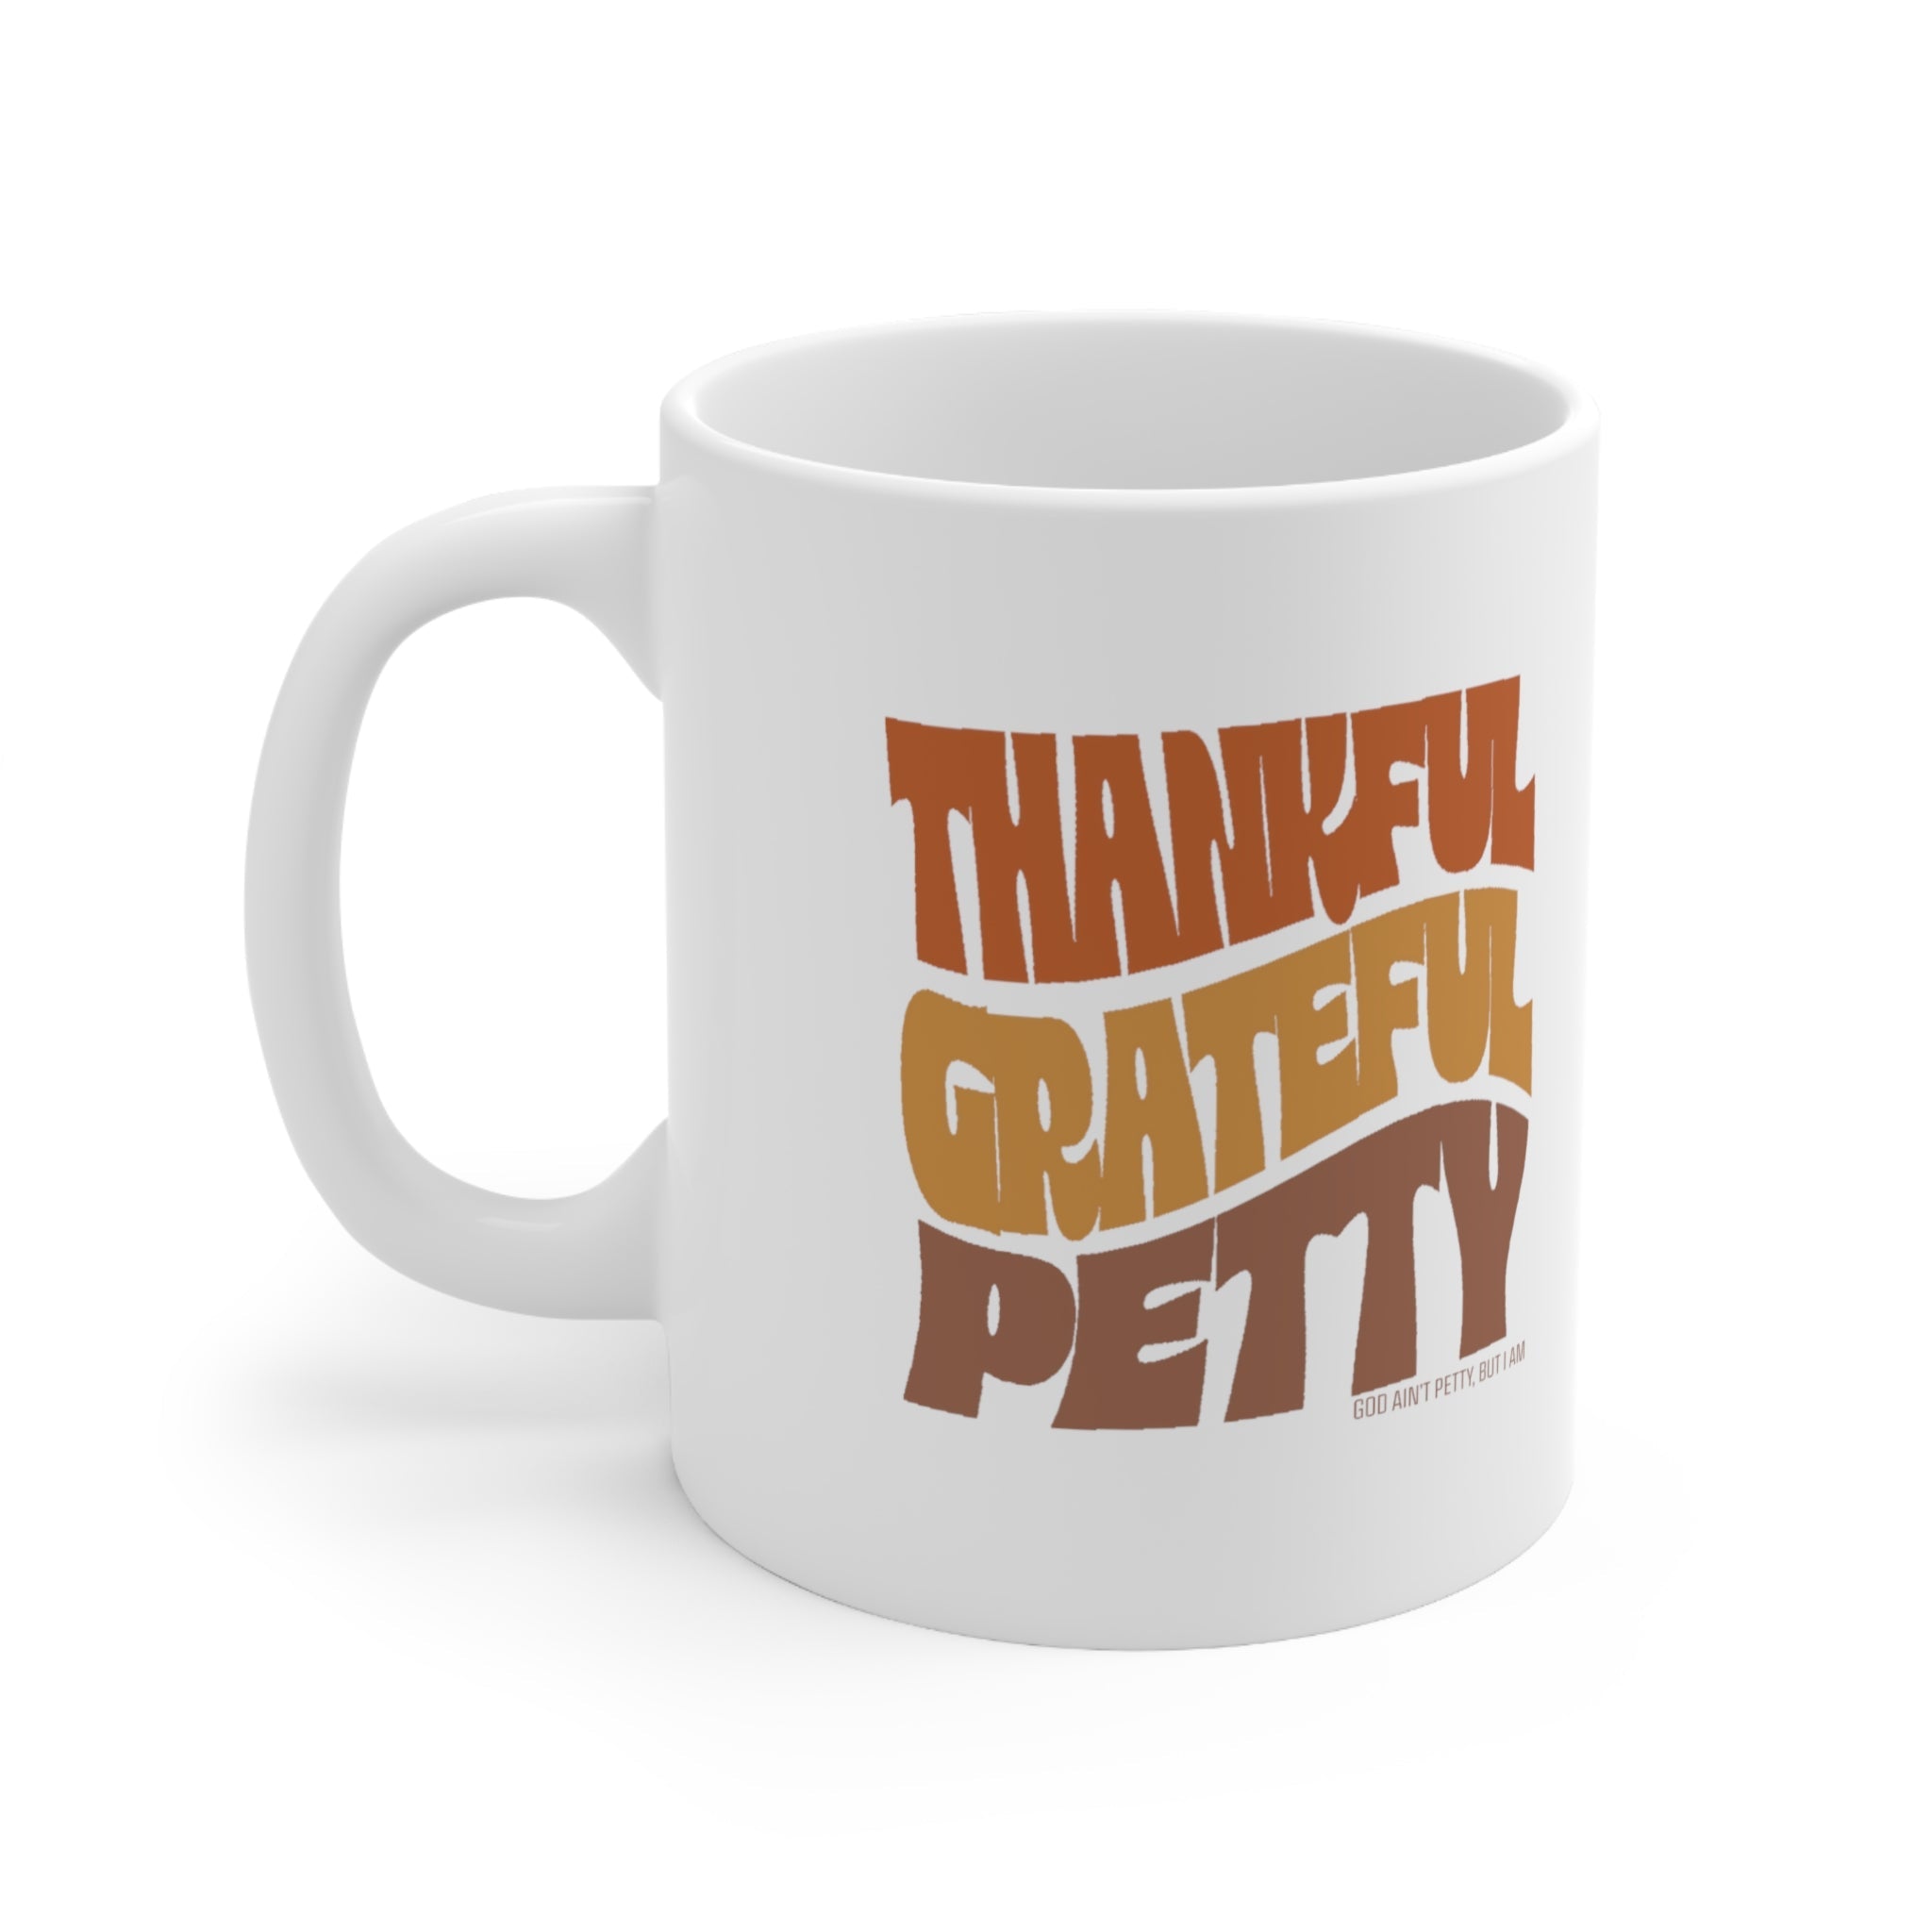 Thankful Grateful Petty Mug 11oz (Fall Color )-Mug-The Original God Ain't Petty But I Am